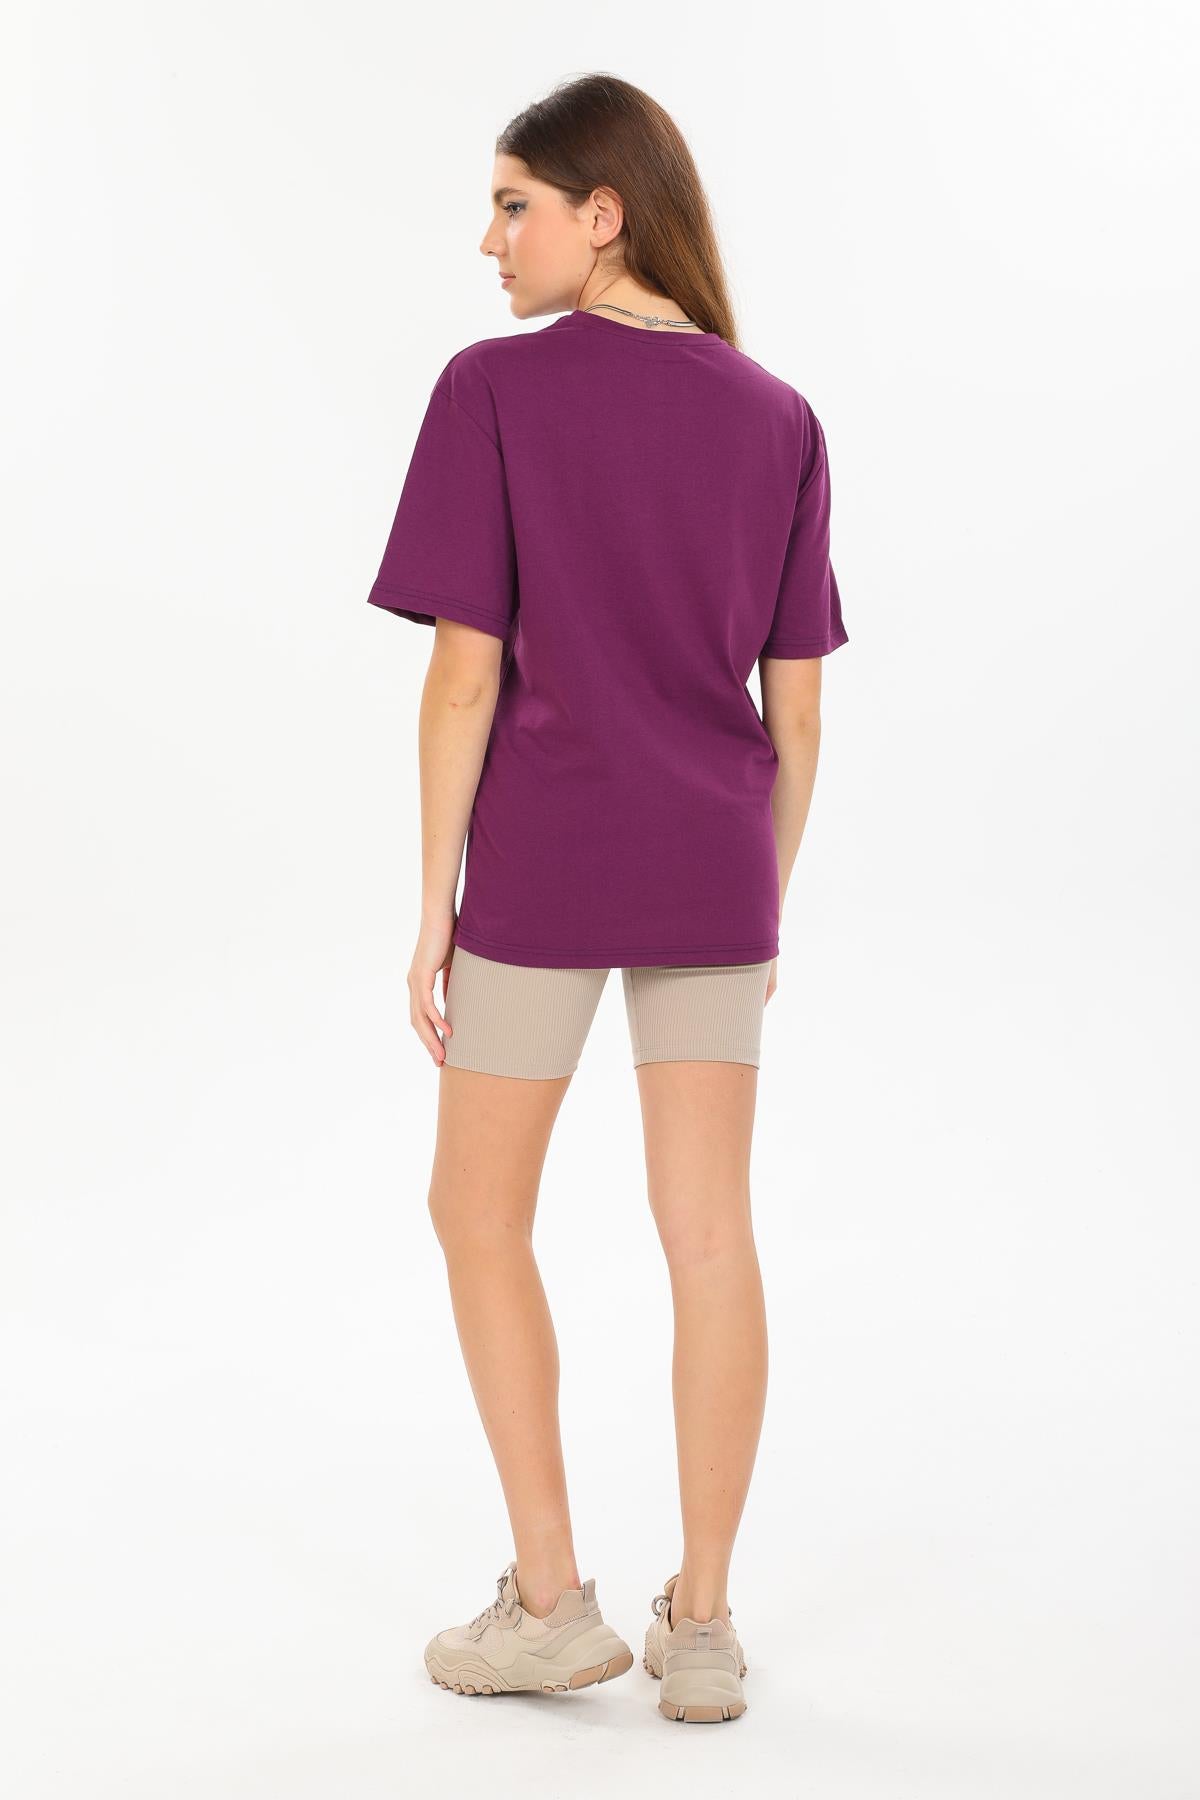 Oversizle fit cotton short sleeve Basic Unisex Women Men's Unisex T -shirt